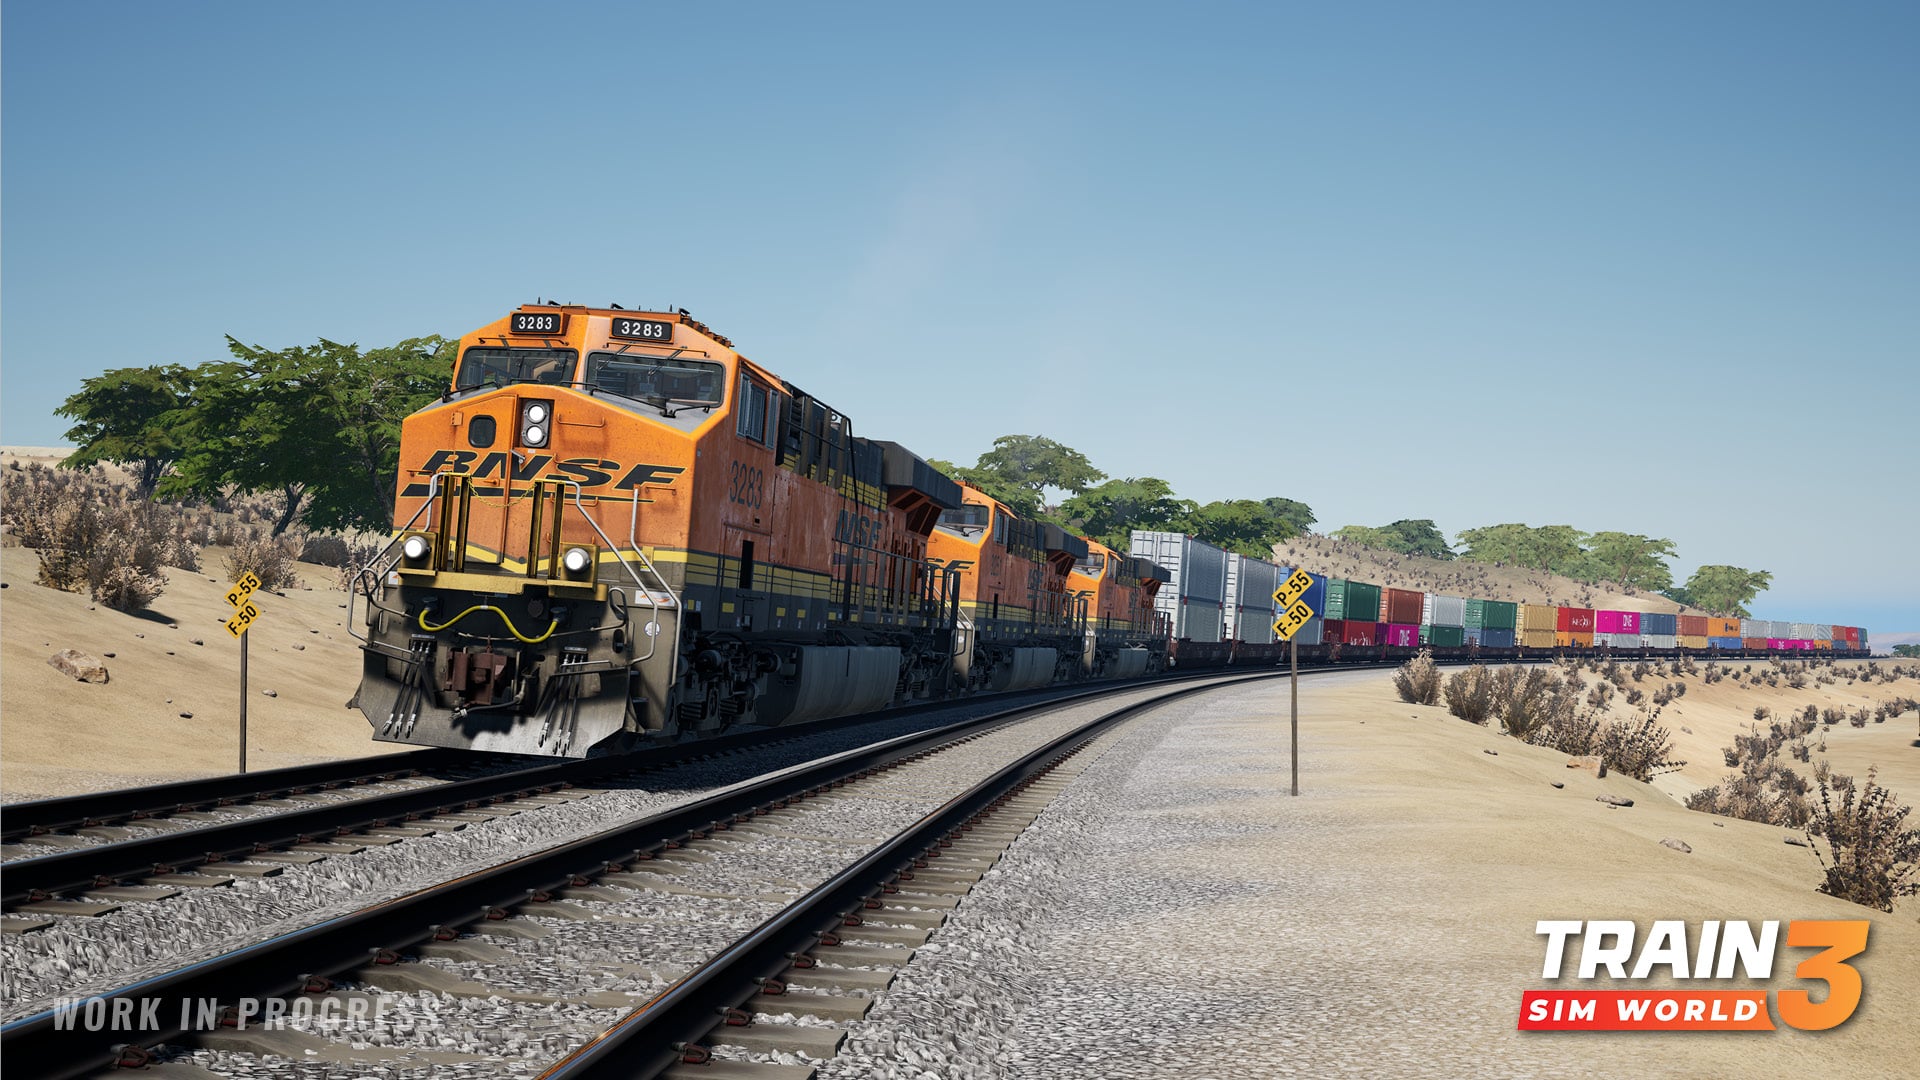 Train Sim World 3 Update 1.43 Brings In Improvements This June 7